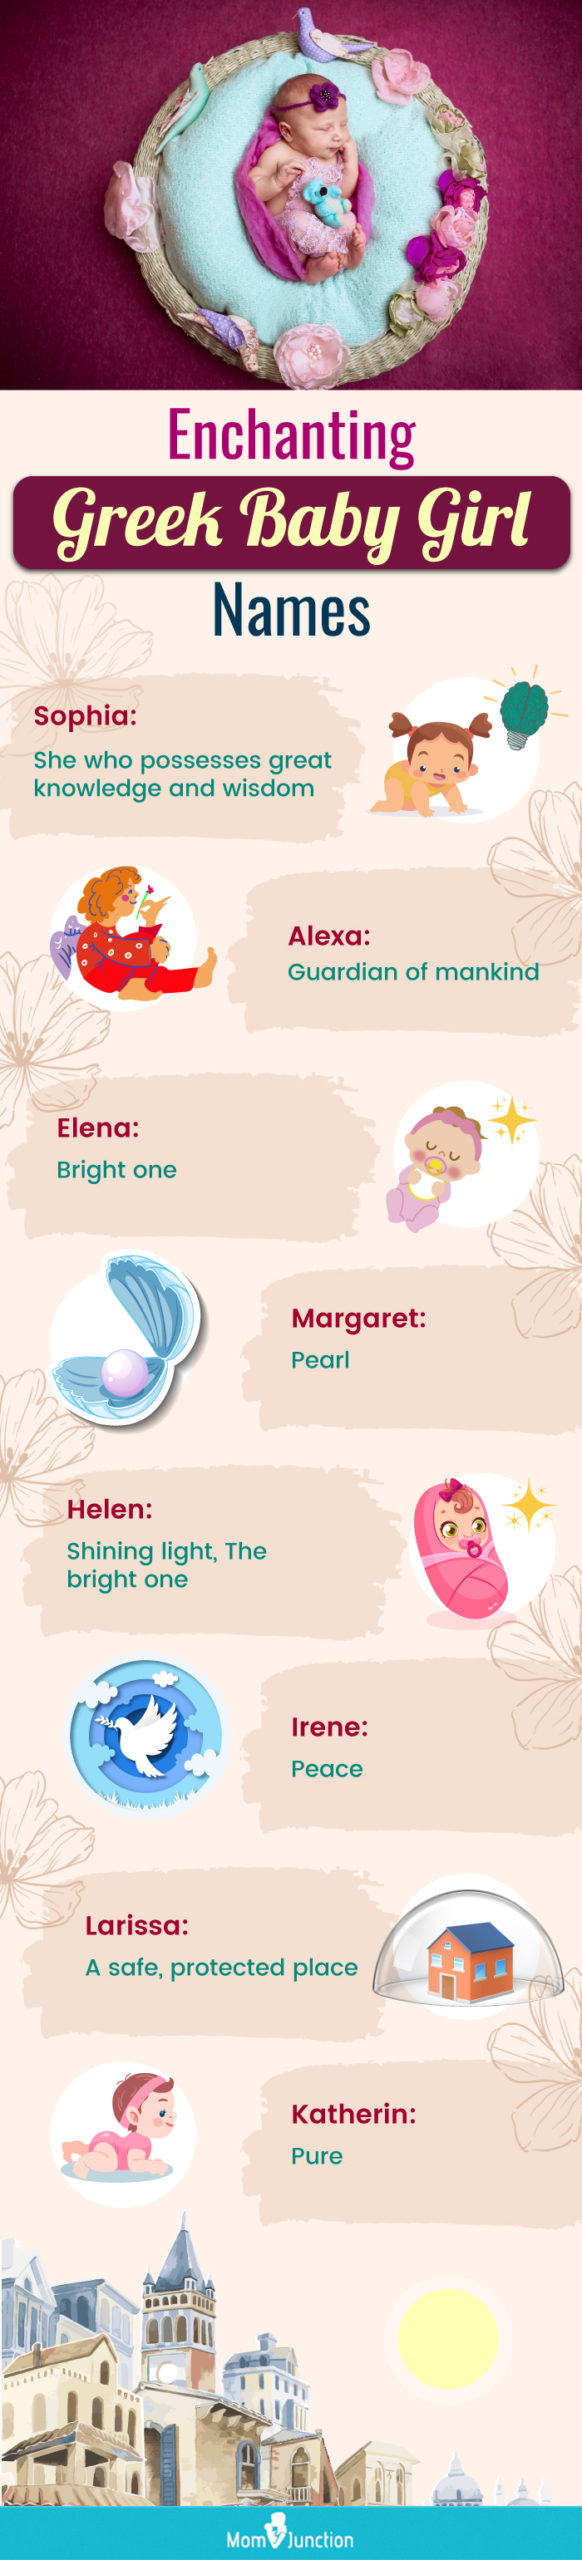 enchanting greek baby girl names (infographic)